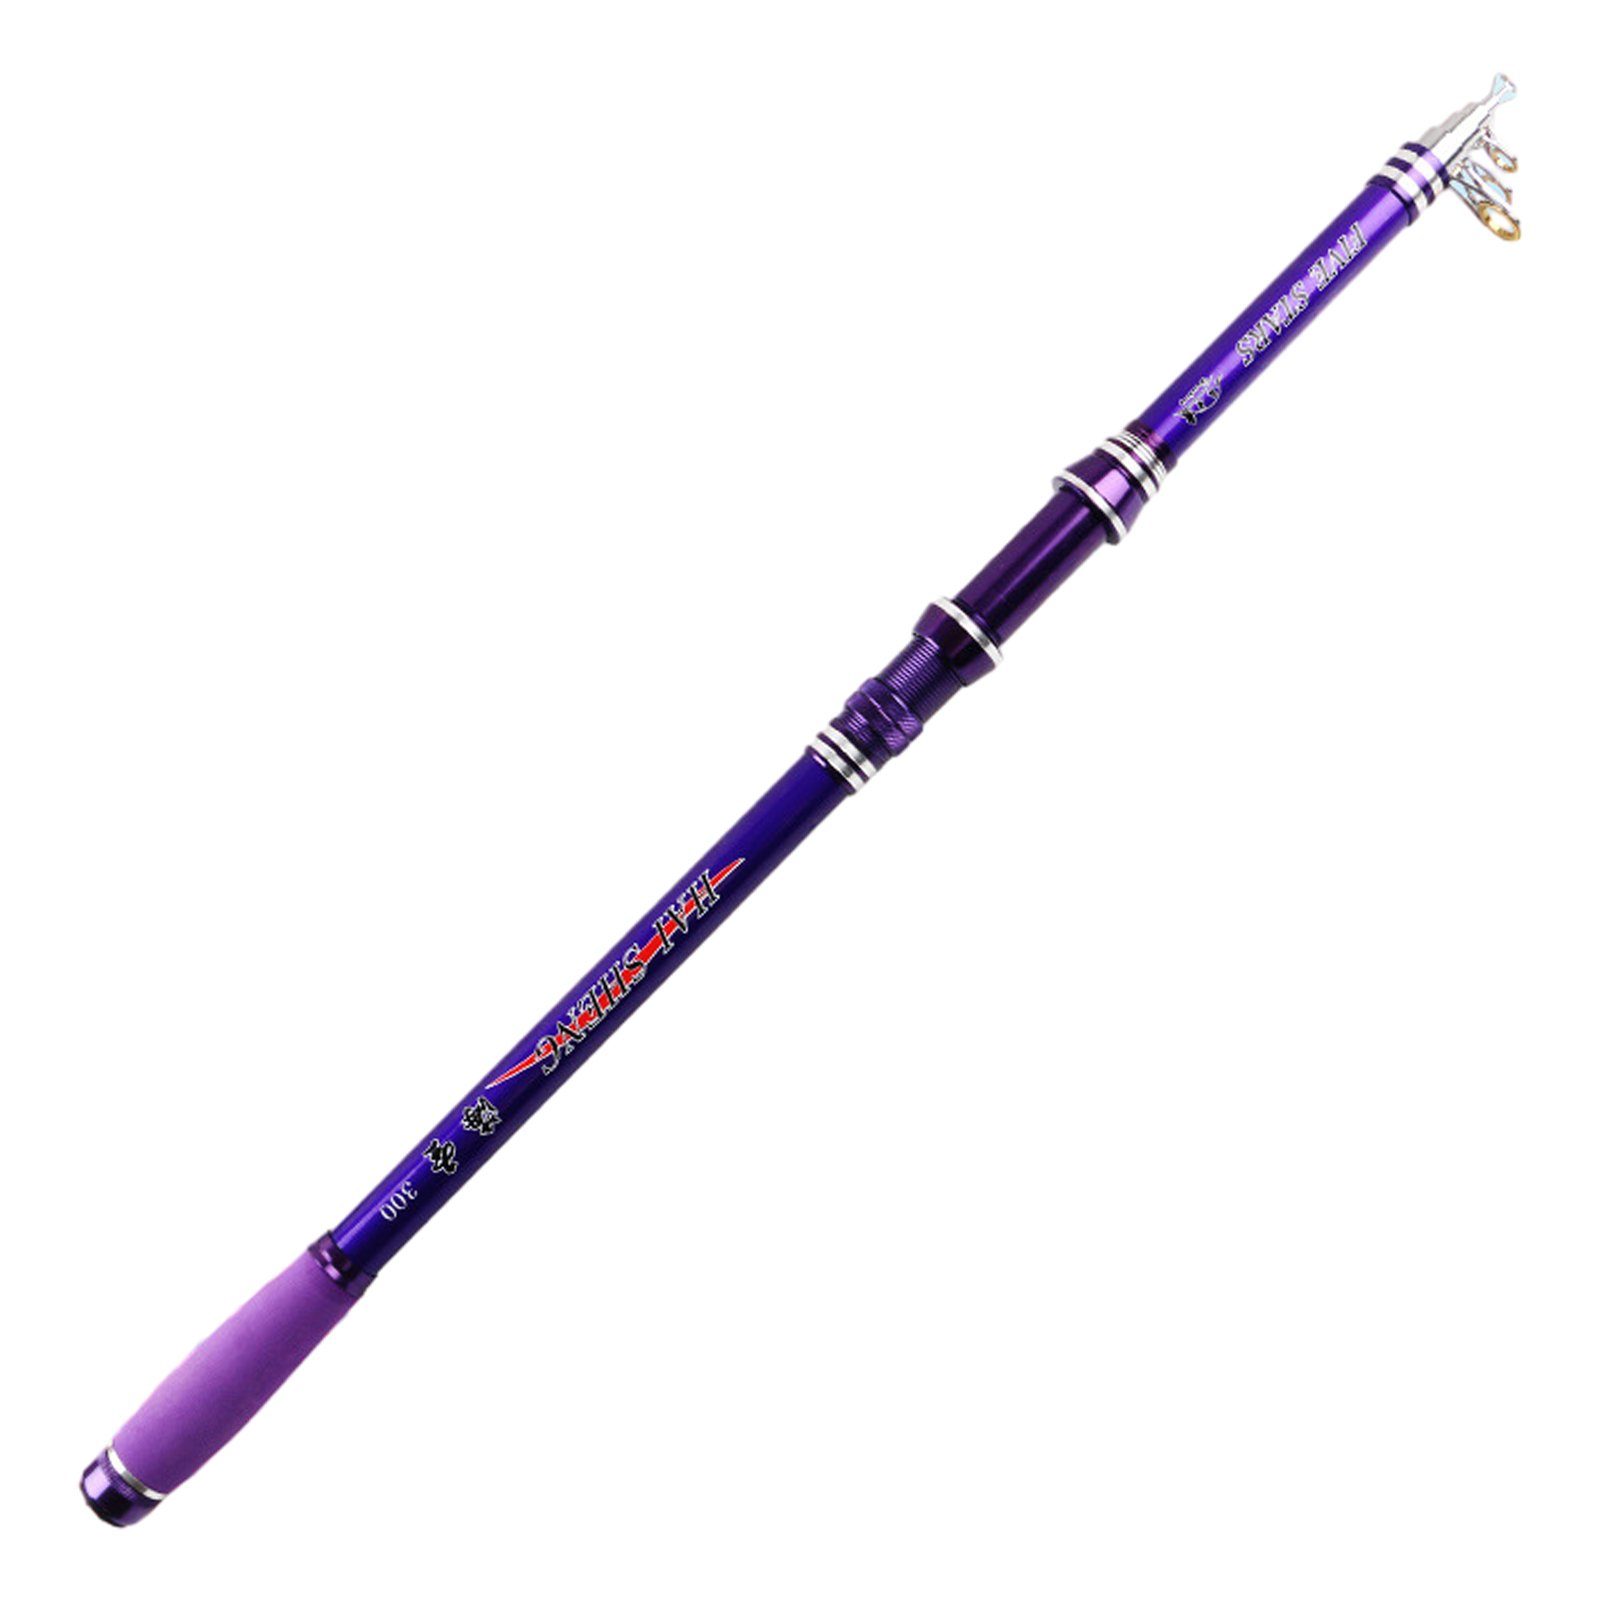 Teleskopische, Blusmart Ultraleichte Karpfenrute Angelrute, purple Langlebige